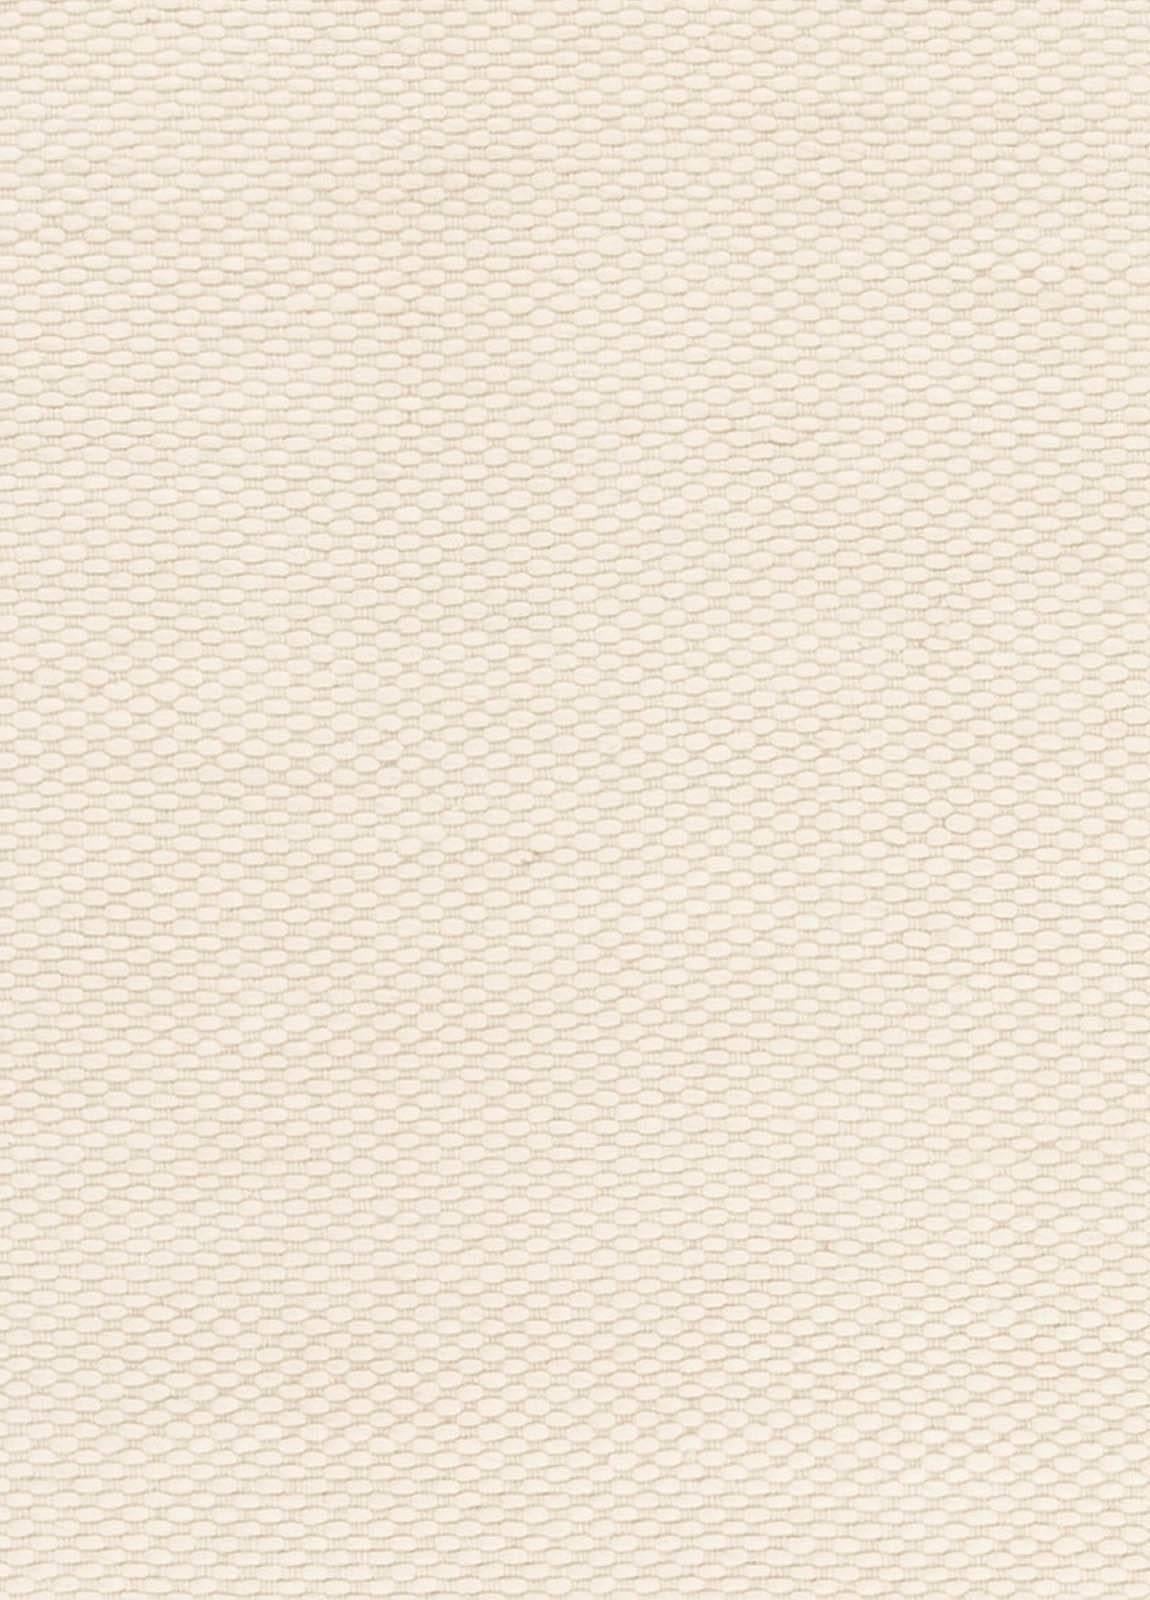 High-Quality Modern solid beige flat-weave wool rug by Doris Leslie Blau
Size: 10'5